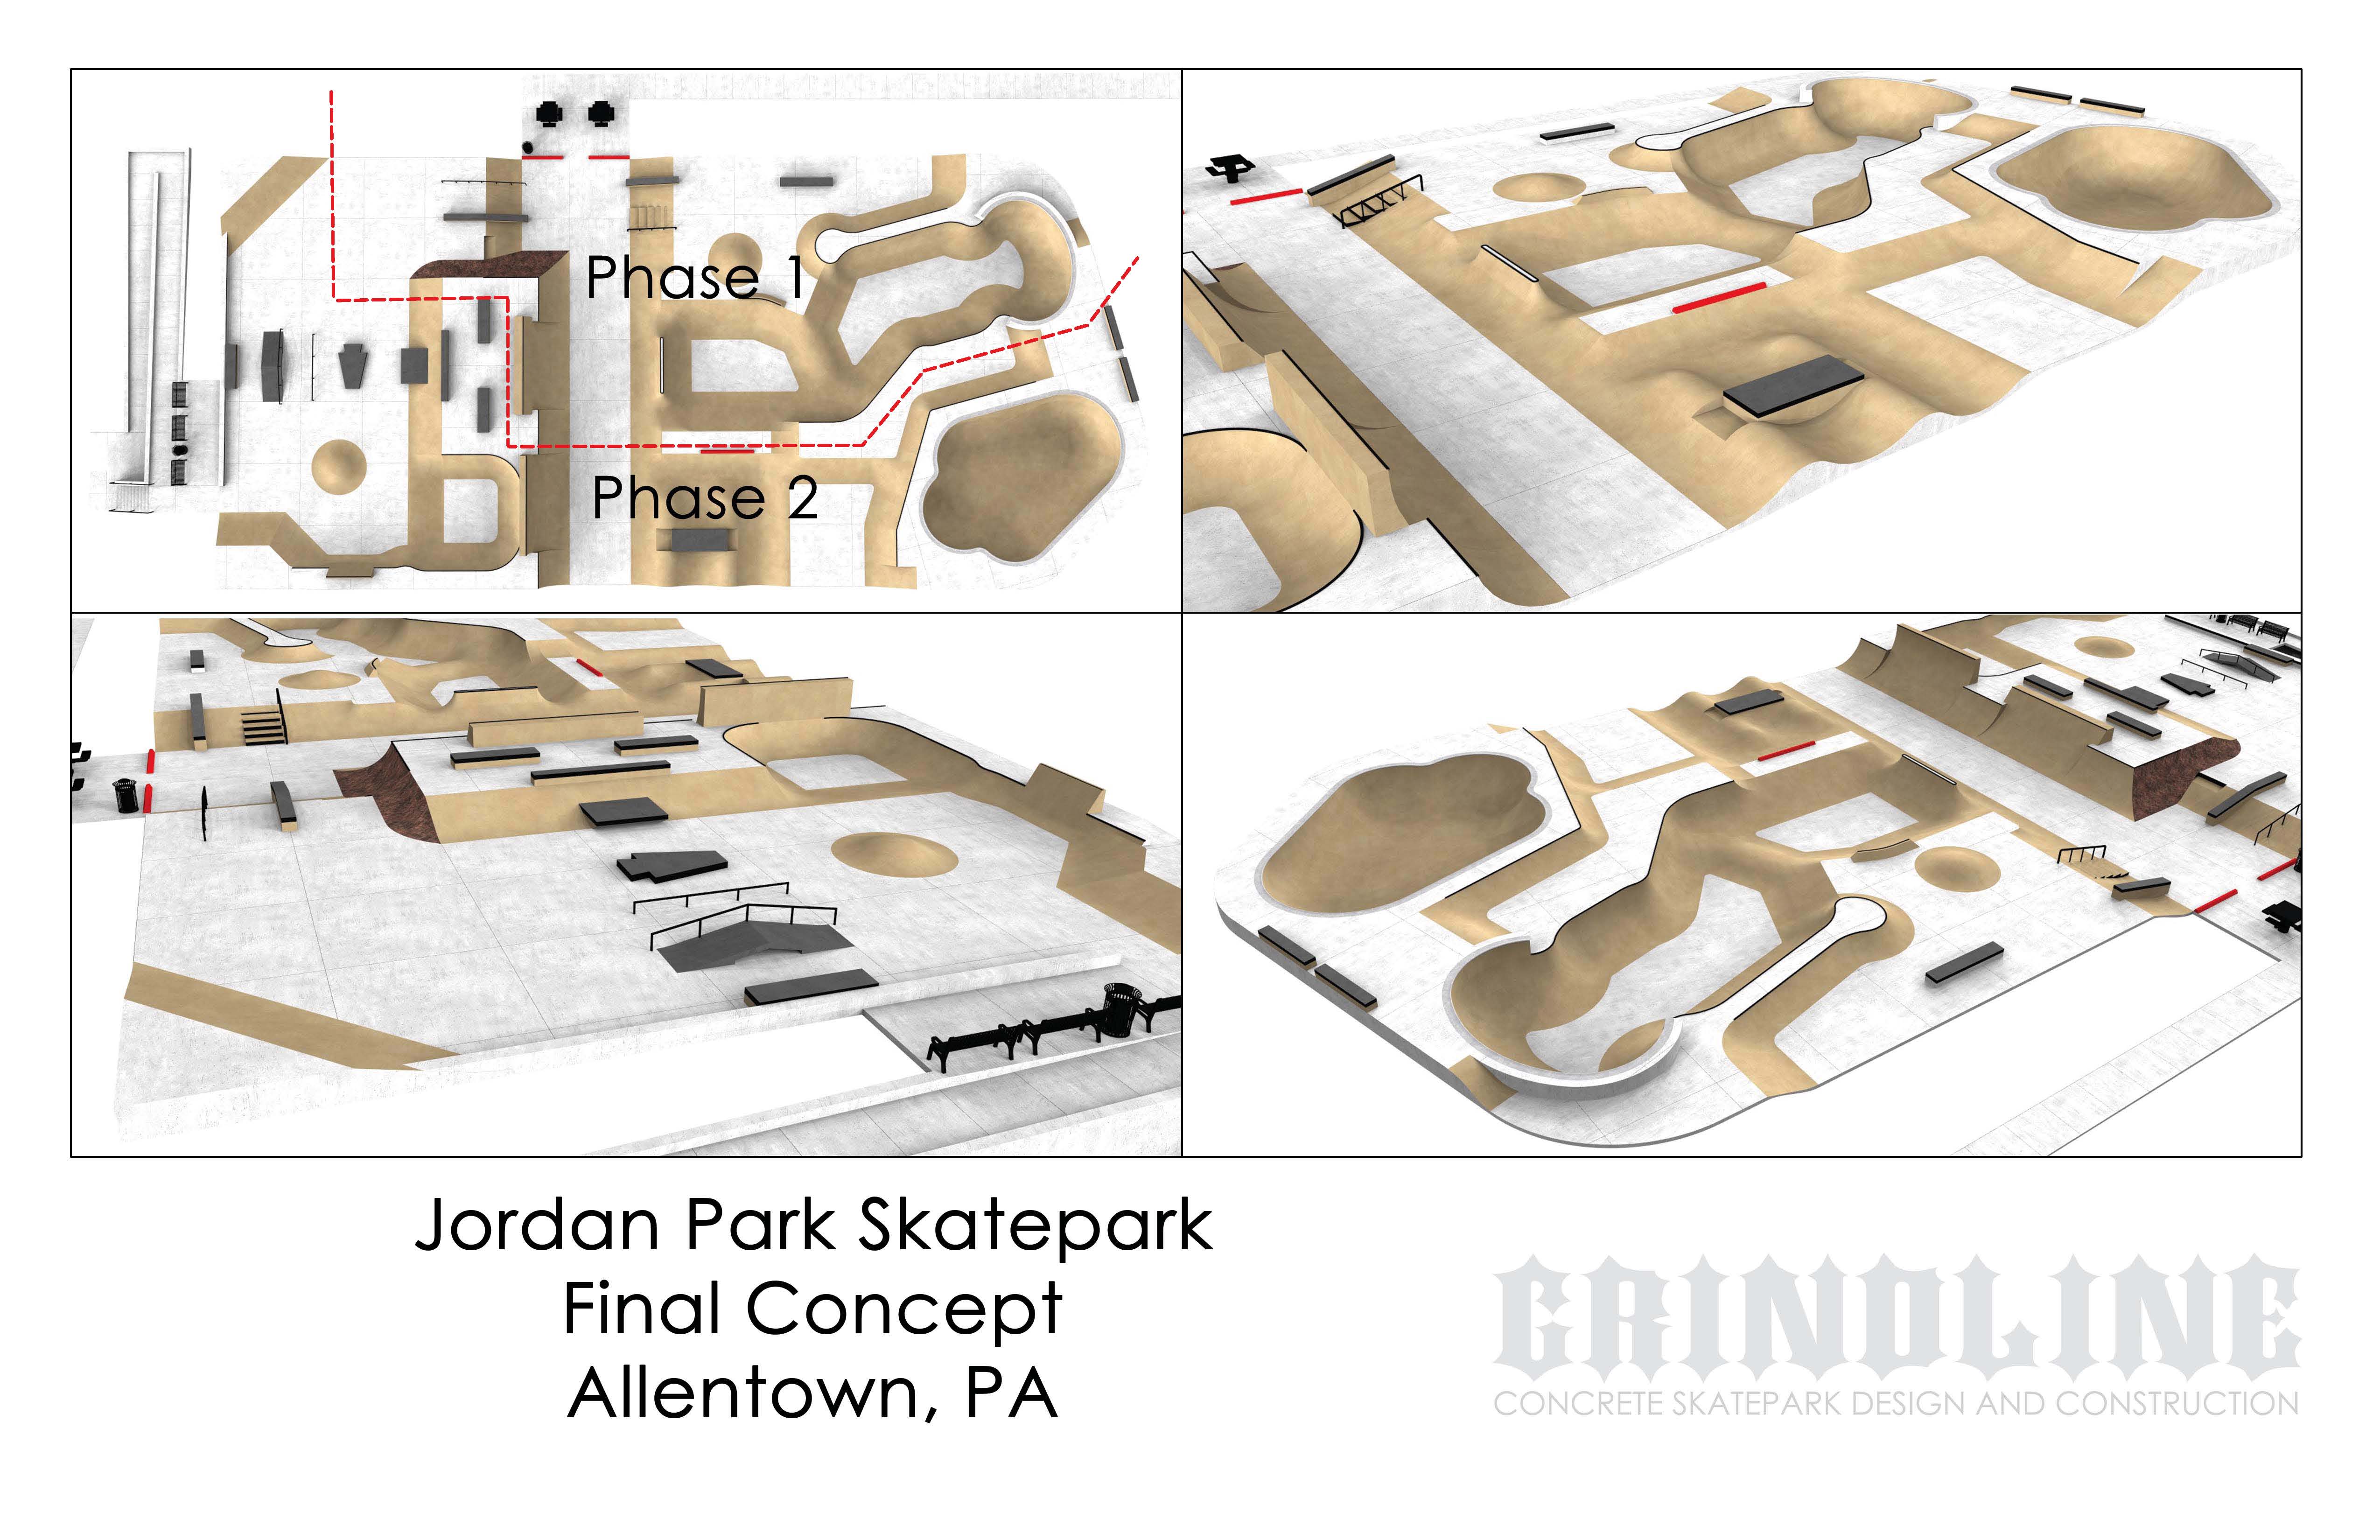 Click here to load the Jordan Park Skate Park Concept 2 pdf.